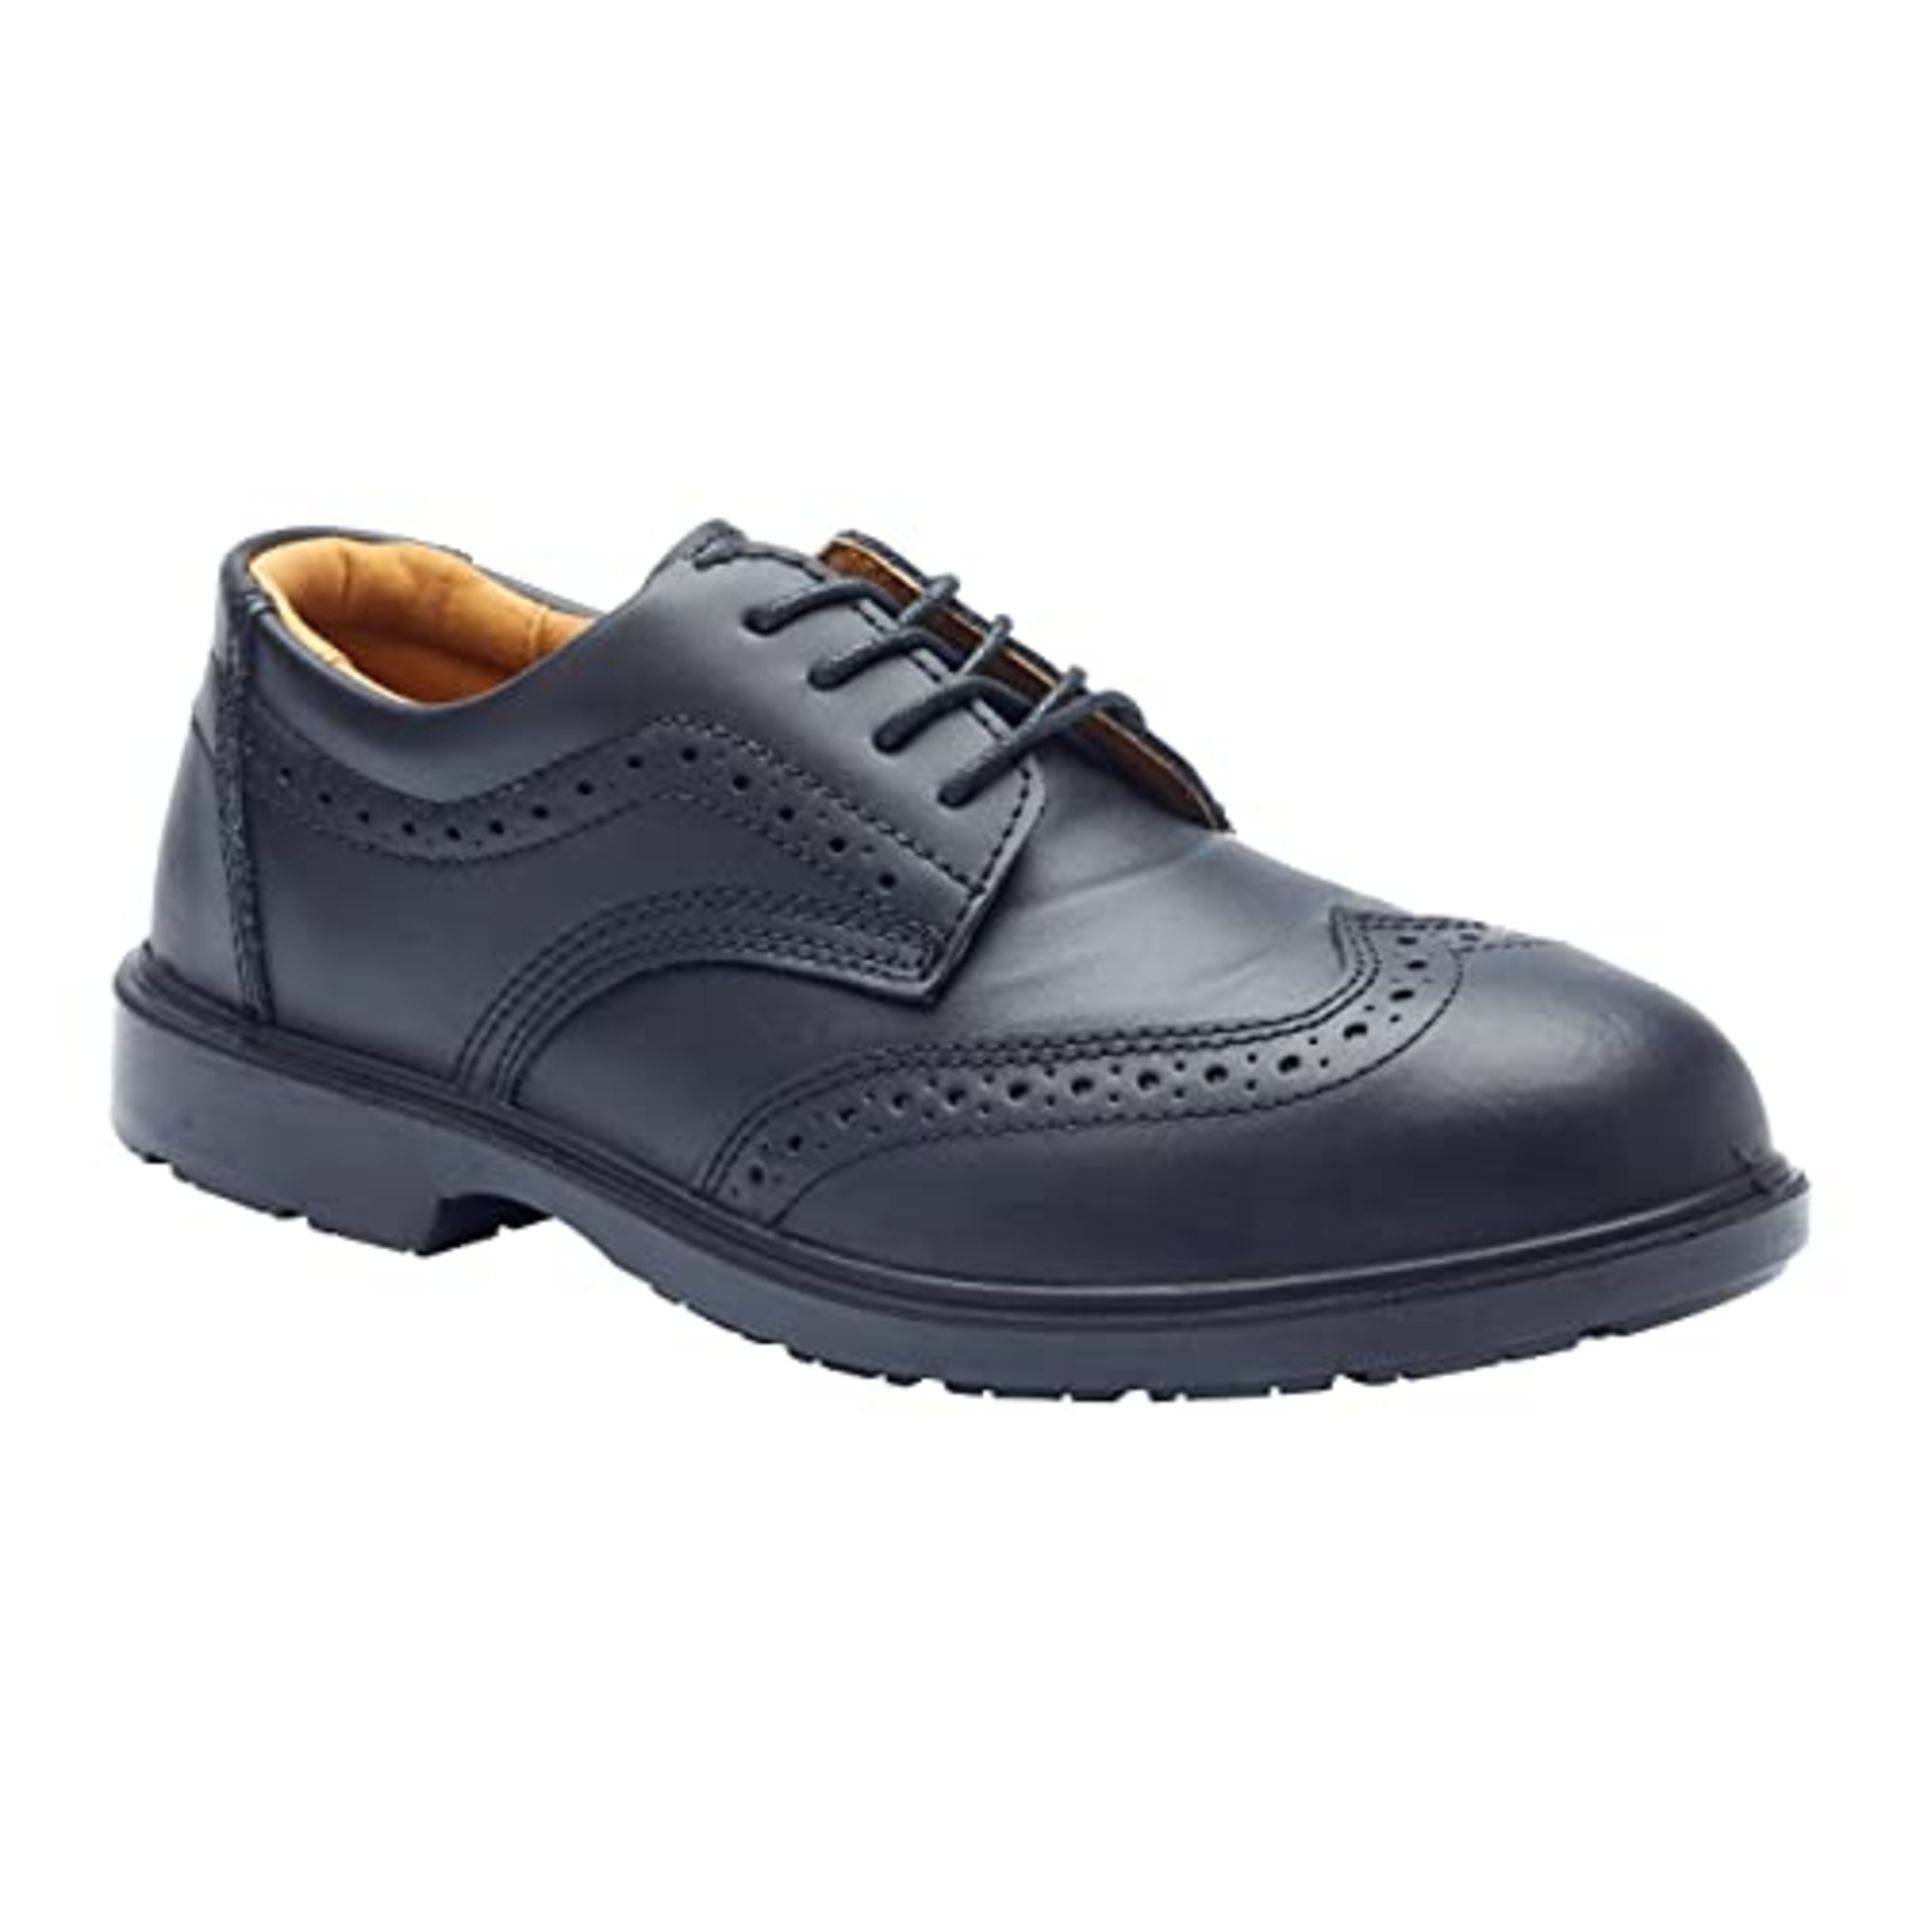 Blackrock Brogue S1-P Lightweight Uniform Safety Shoe, Anti Static Black Leather Safet